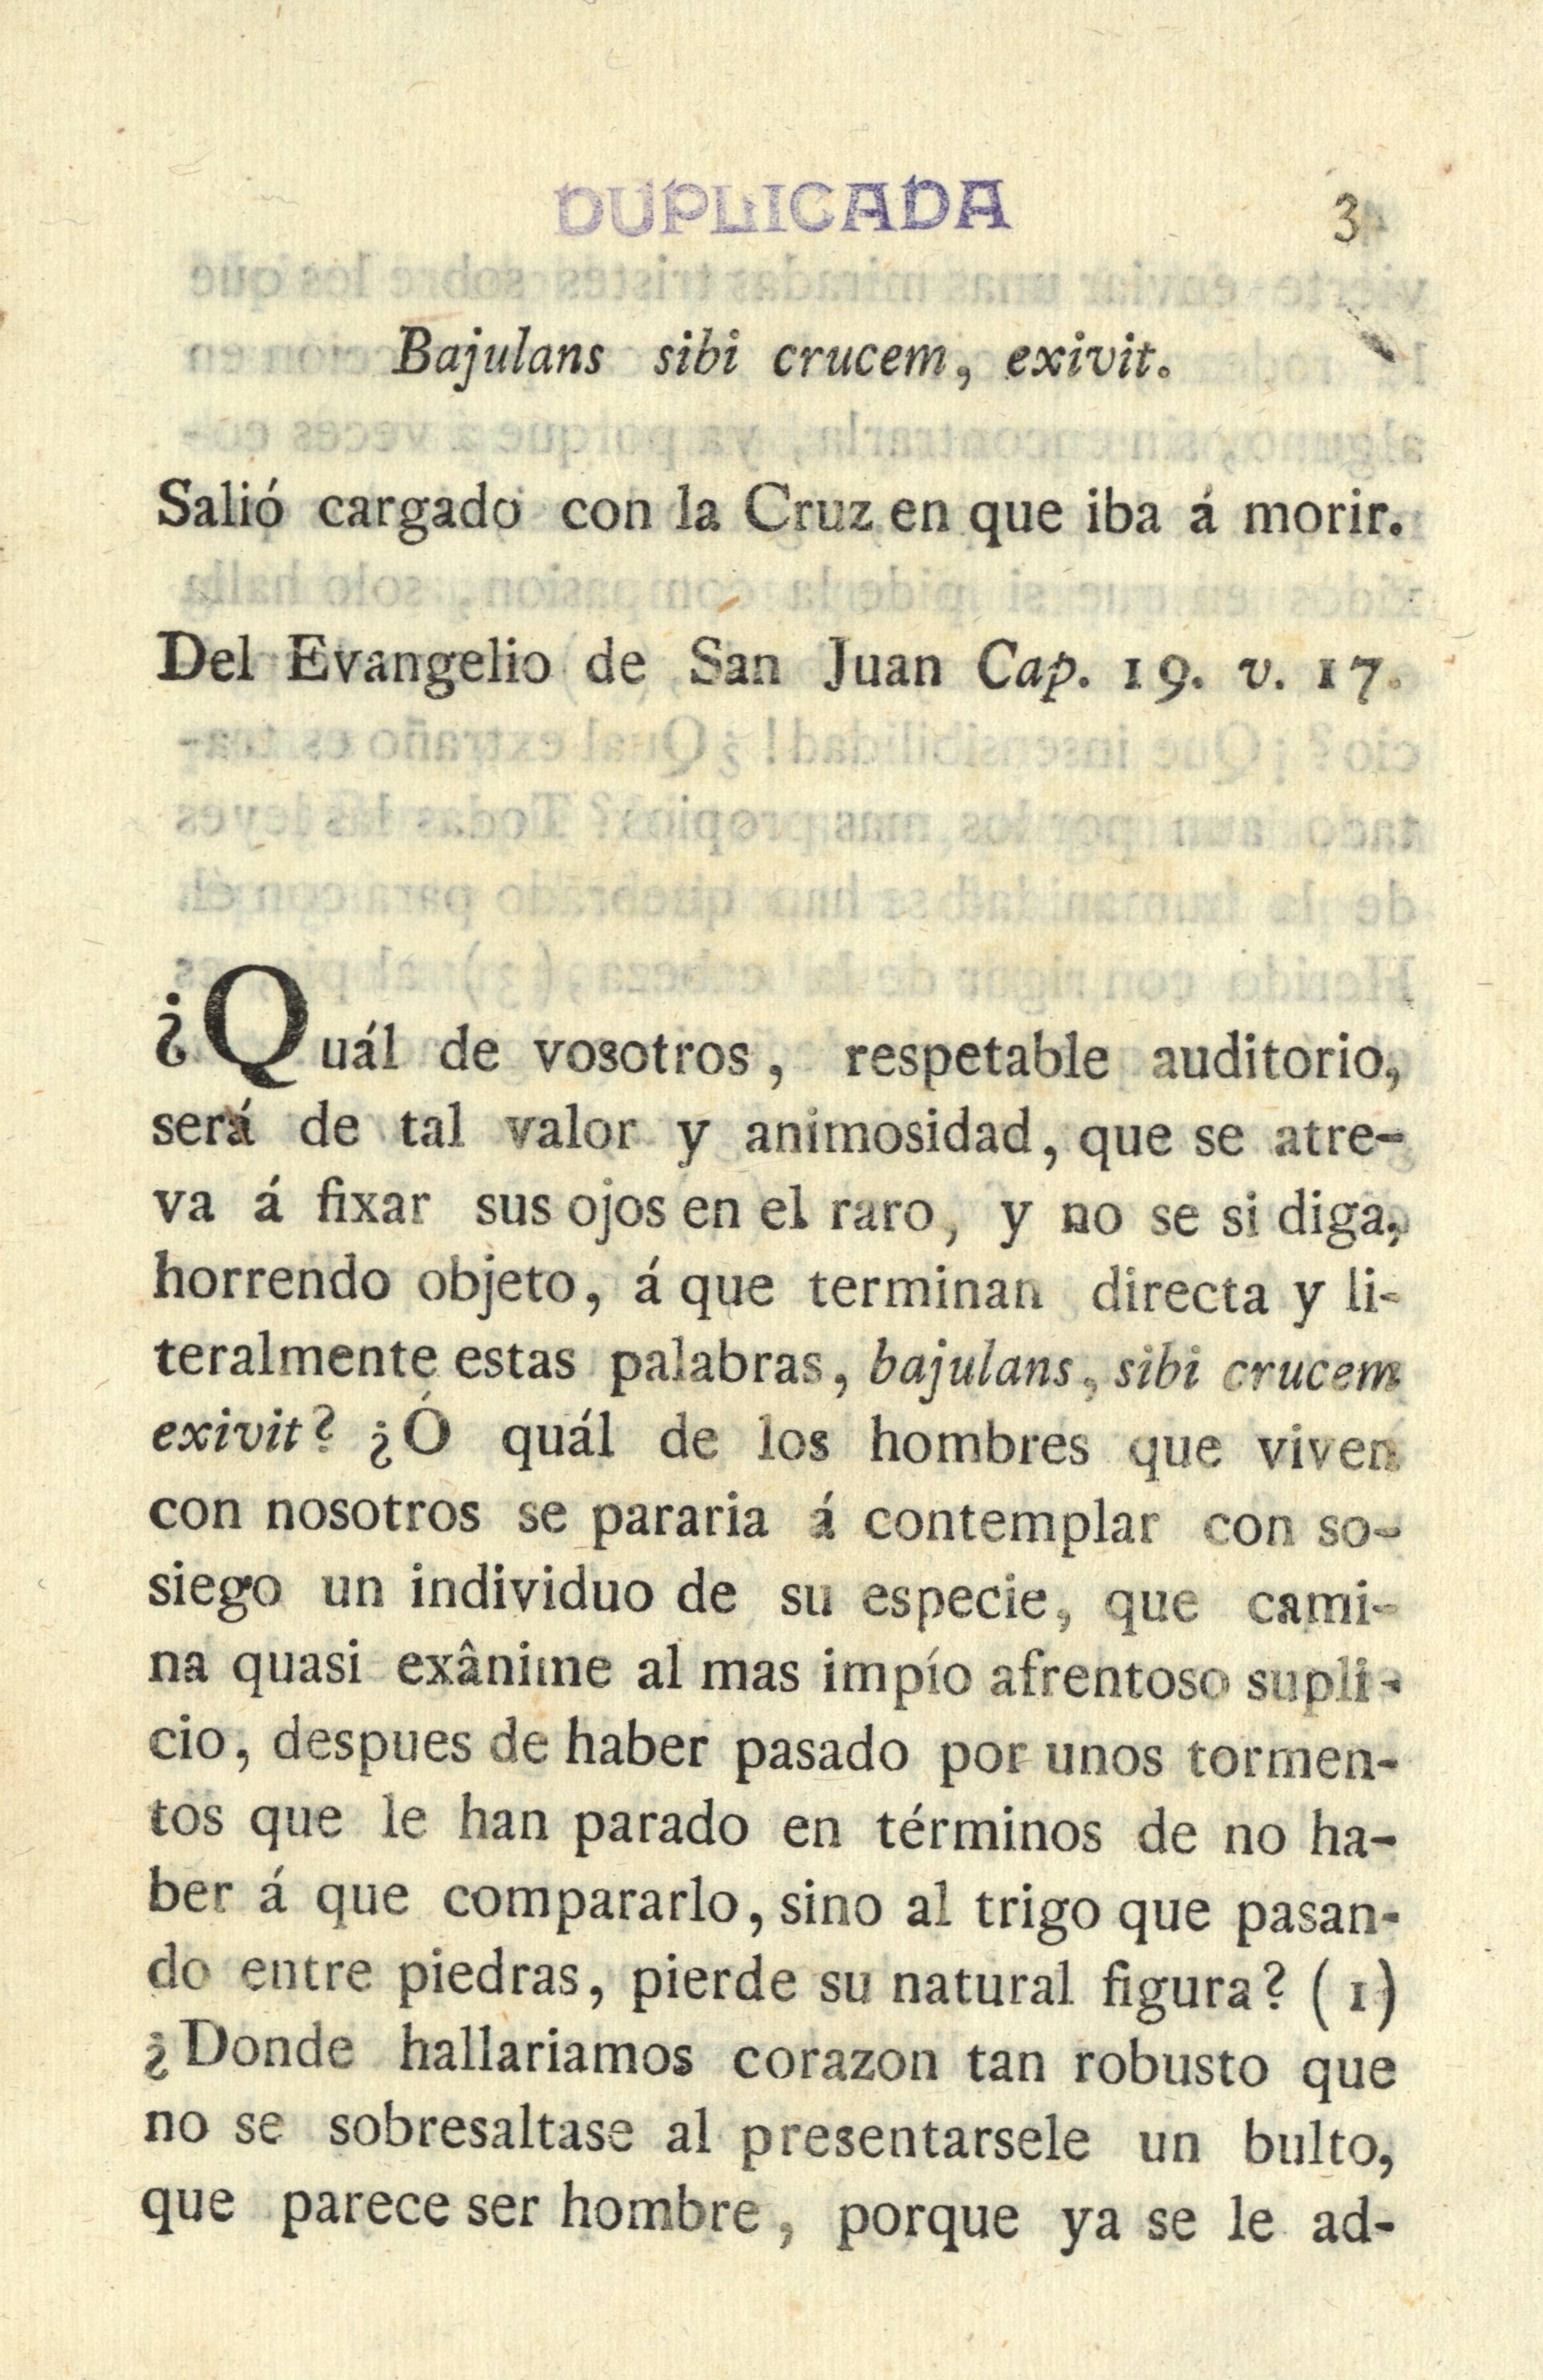 Del Evangelio de San Juan Cap. 19. v. 17